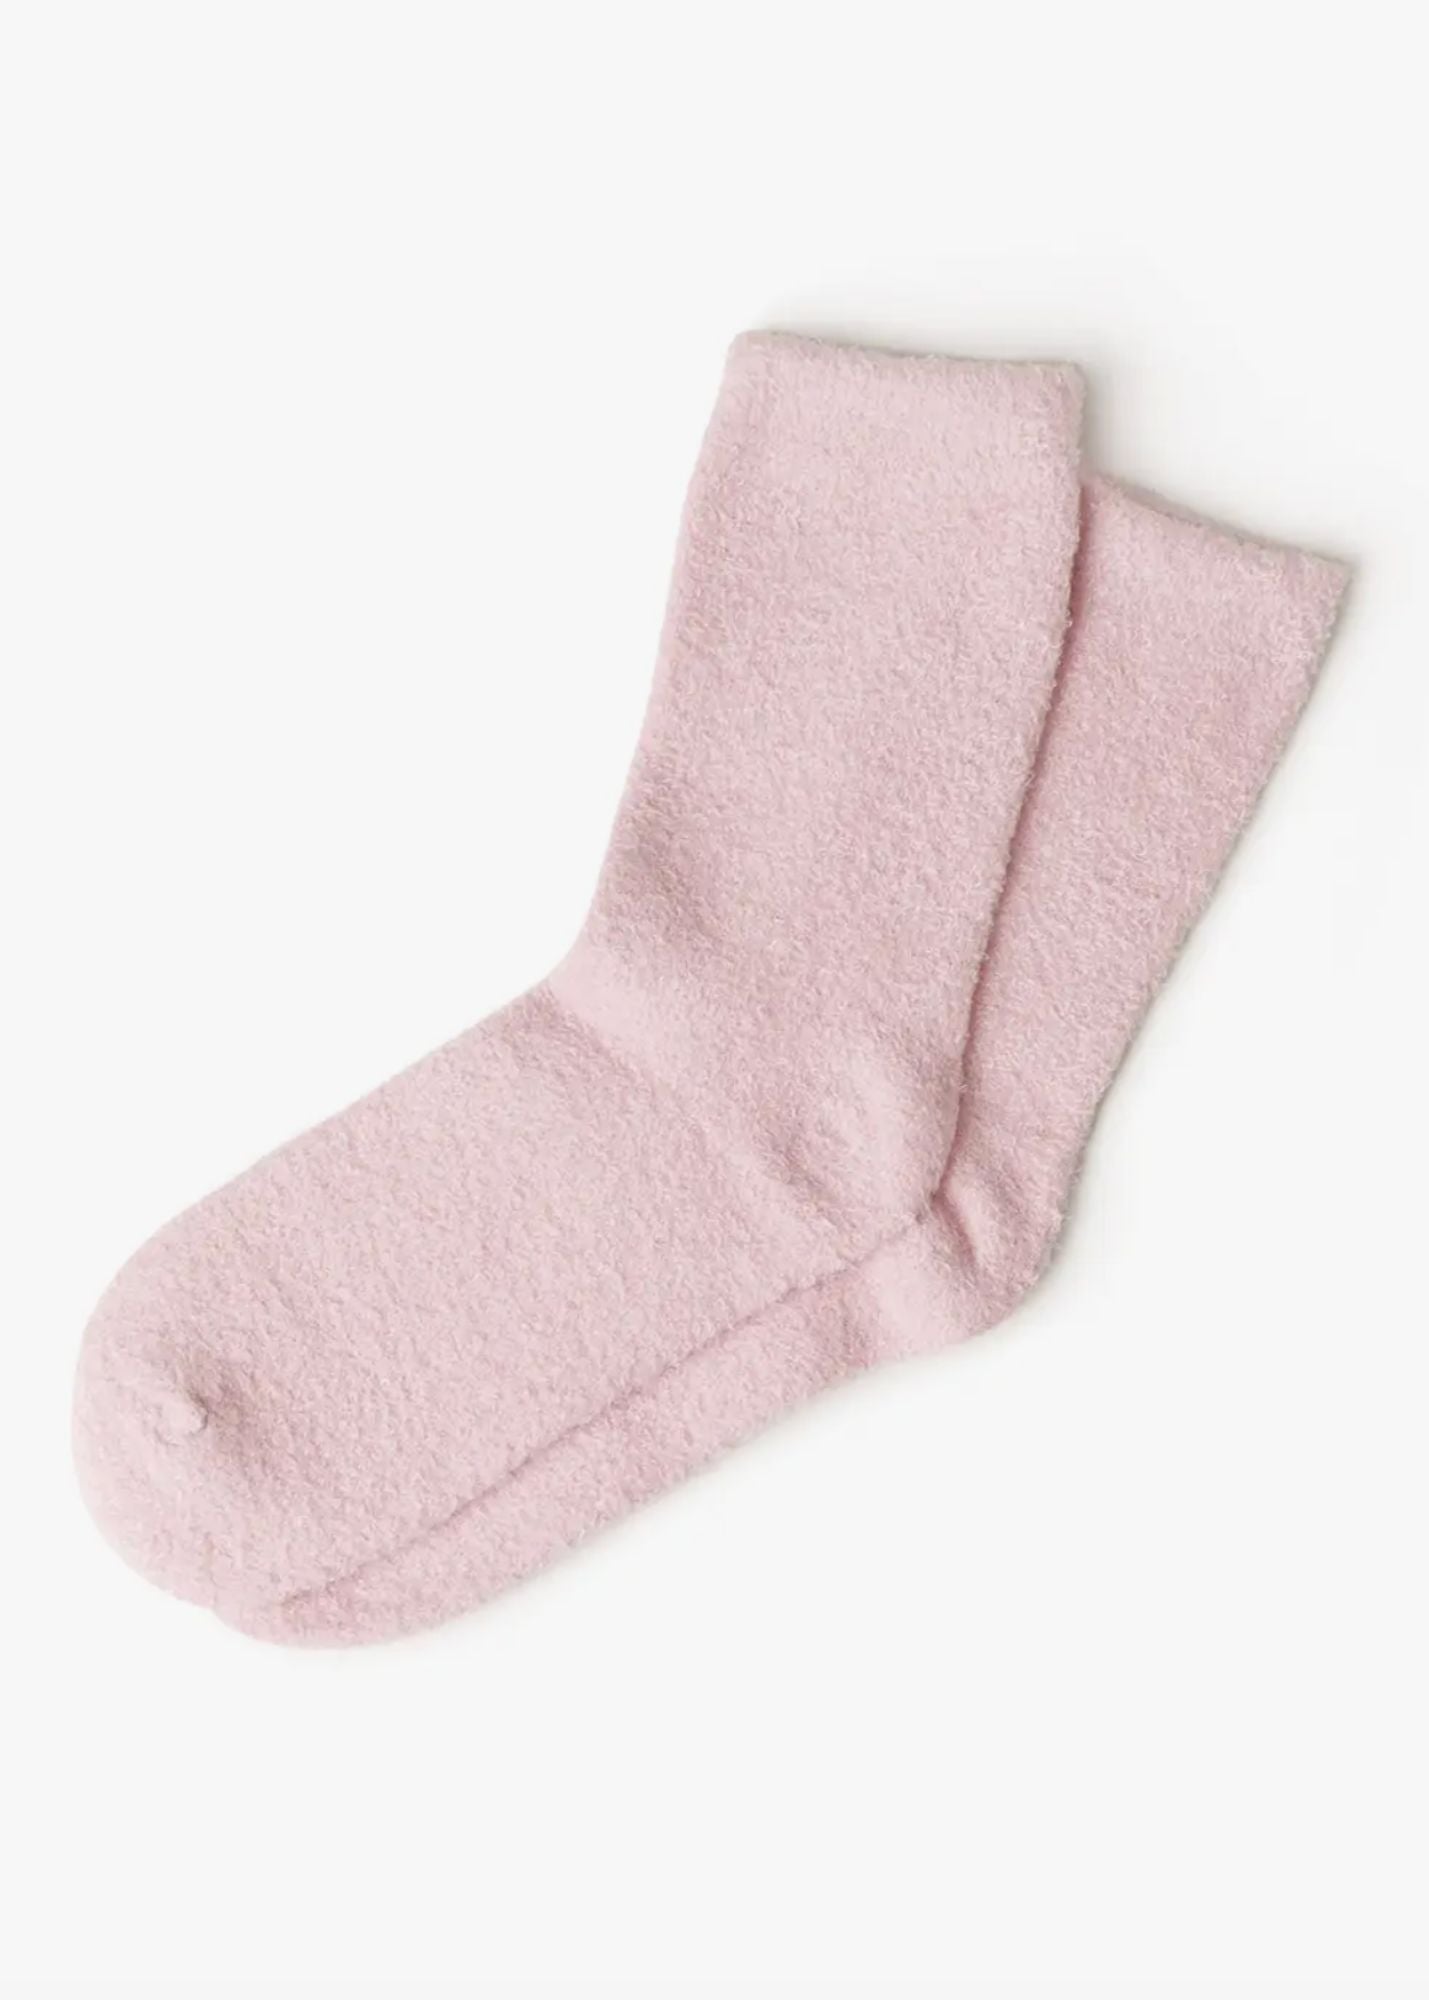 Aloe Super Soft Spa Socks Accessories Pink